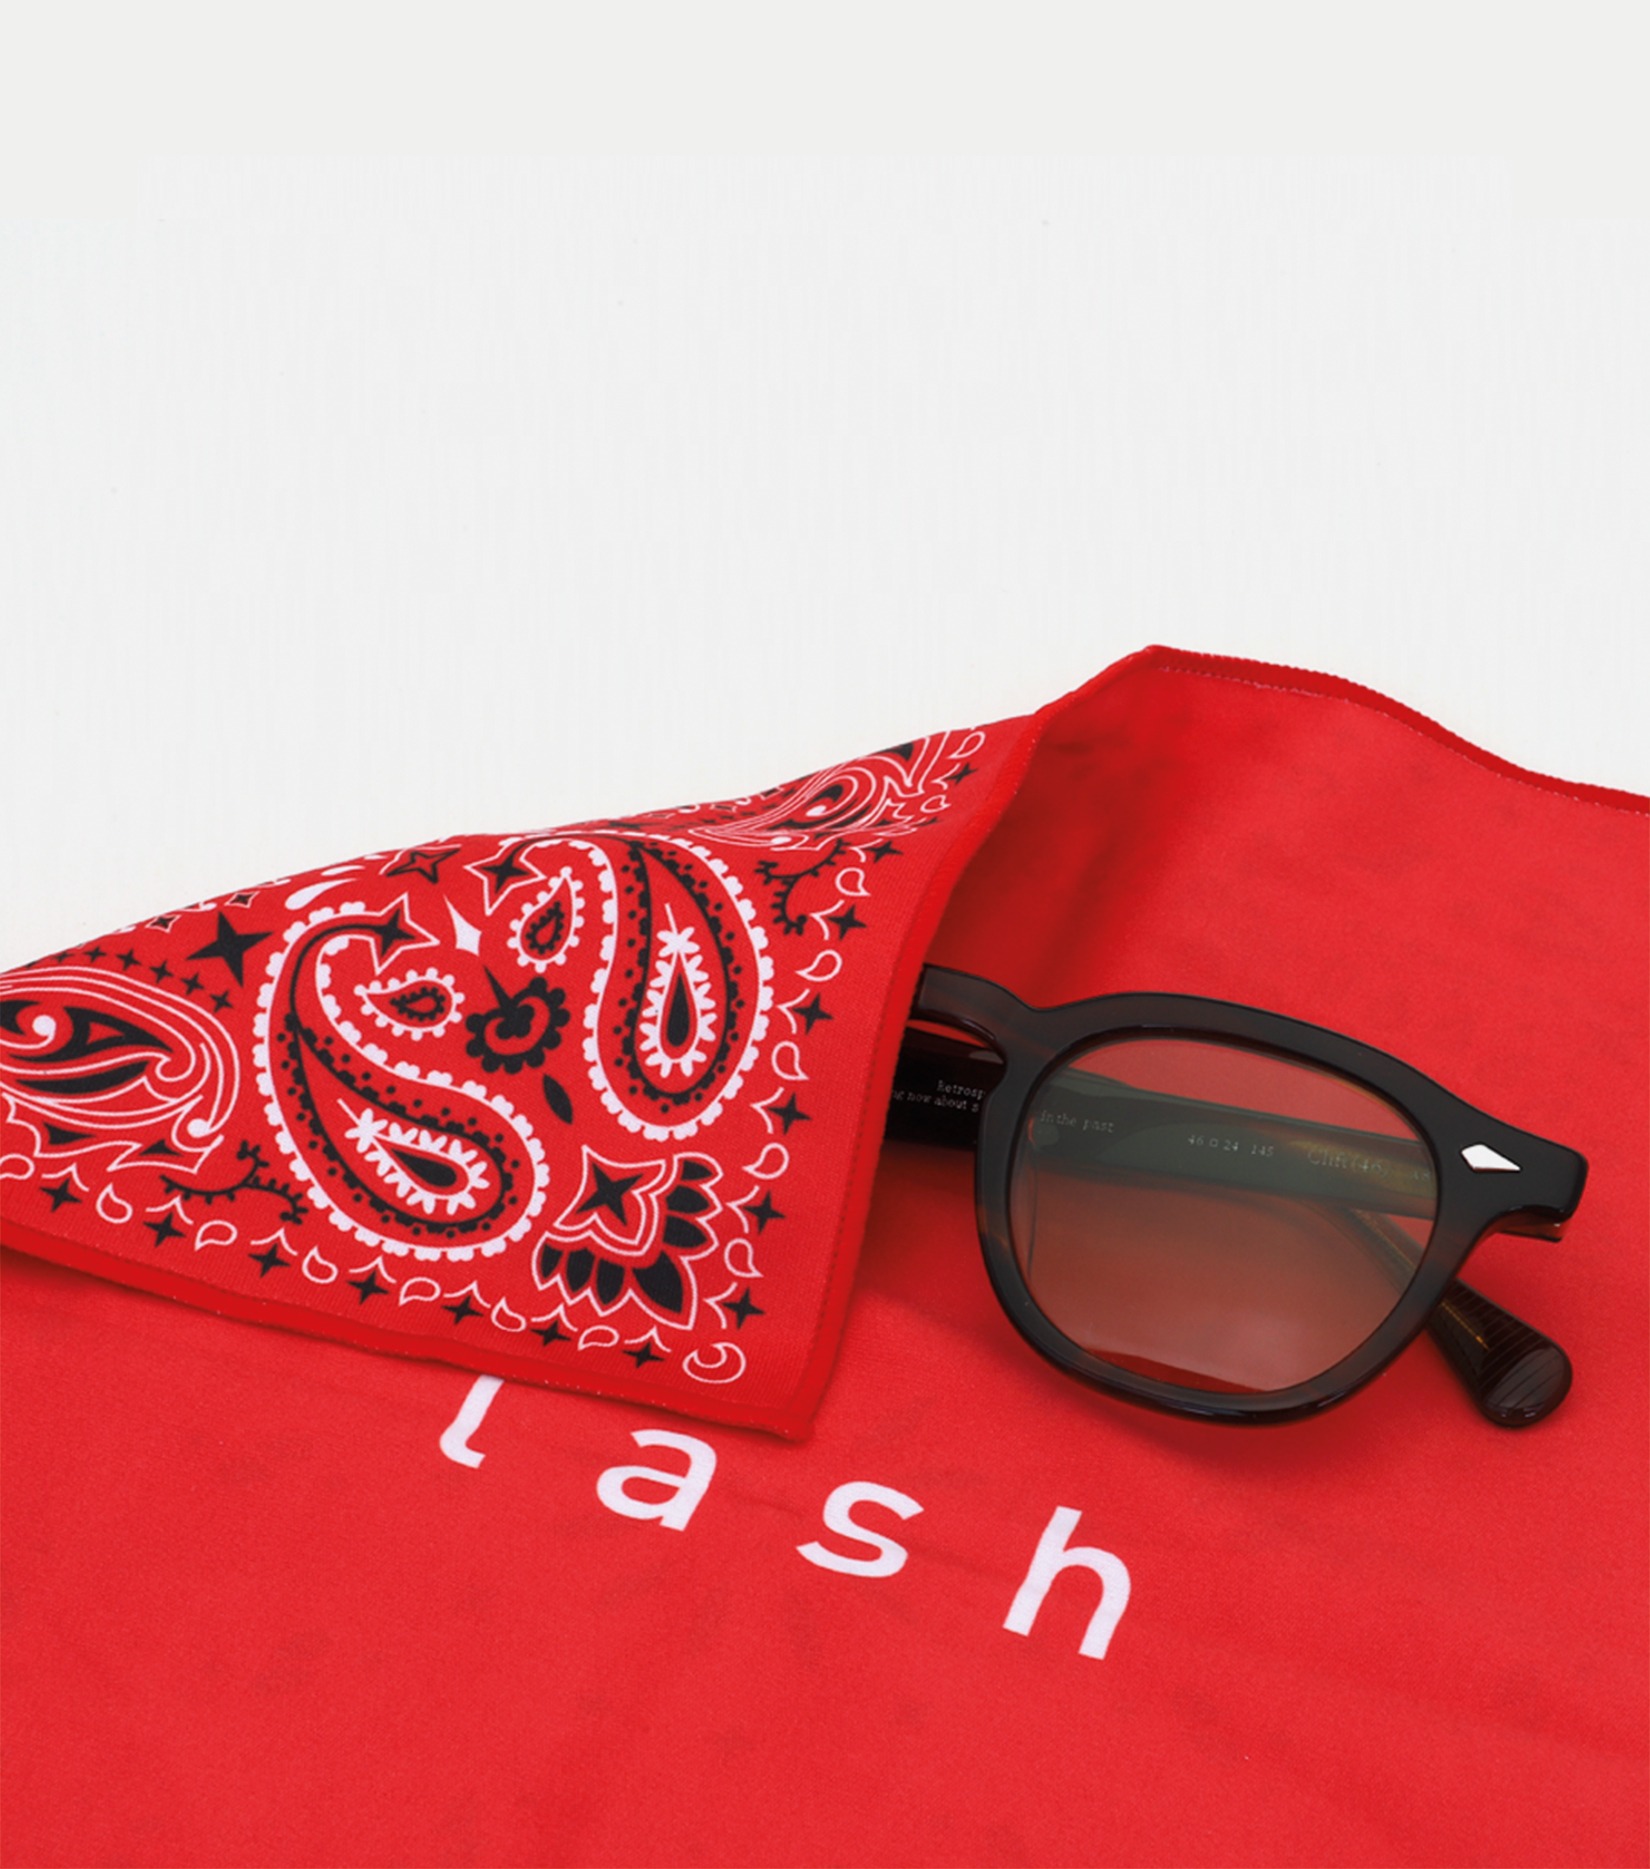 Bandana pattern Microfiber Cleaning Cloth [Red] LASH 래쉬 안경테 선글라스